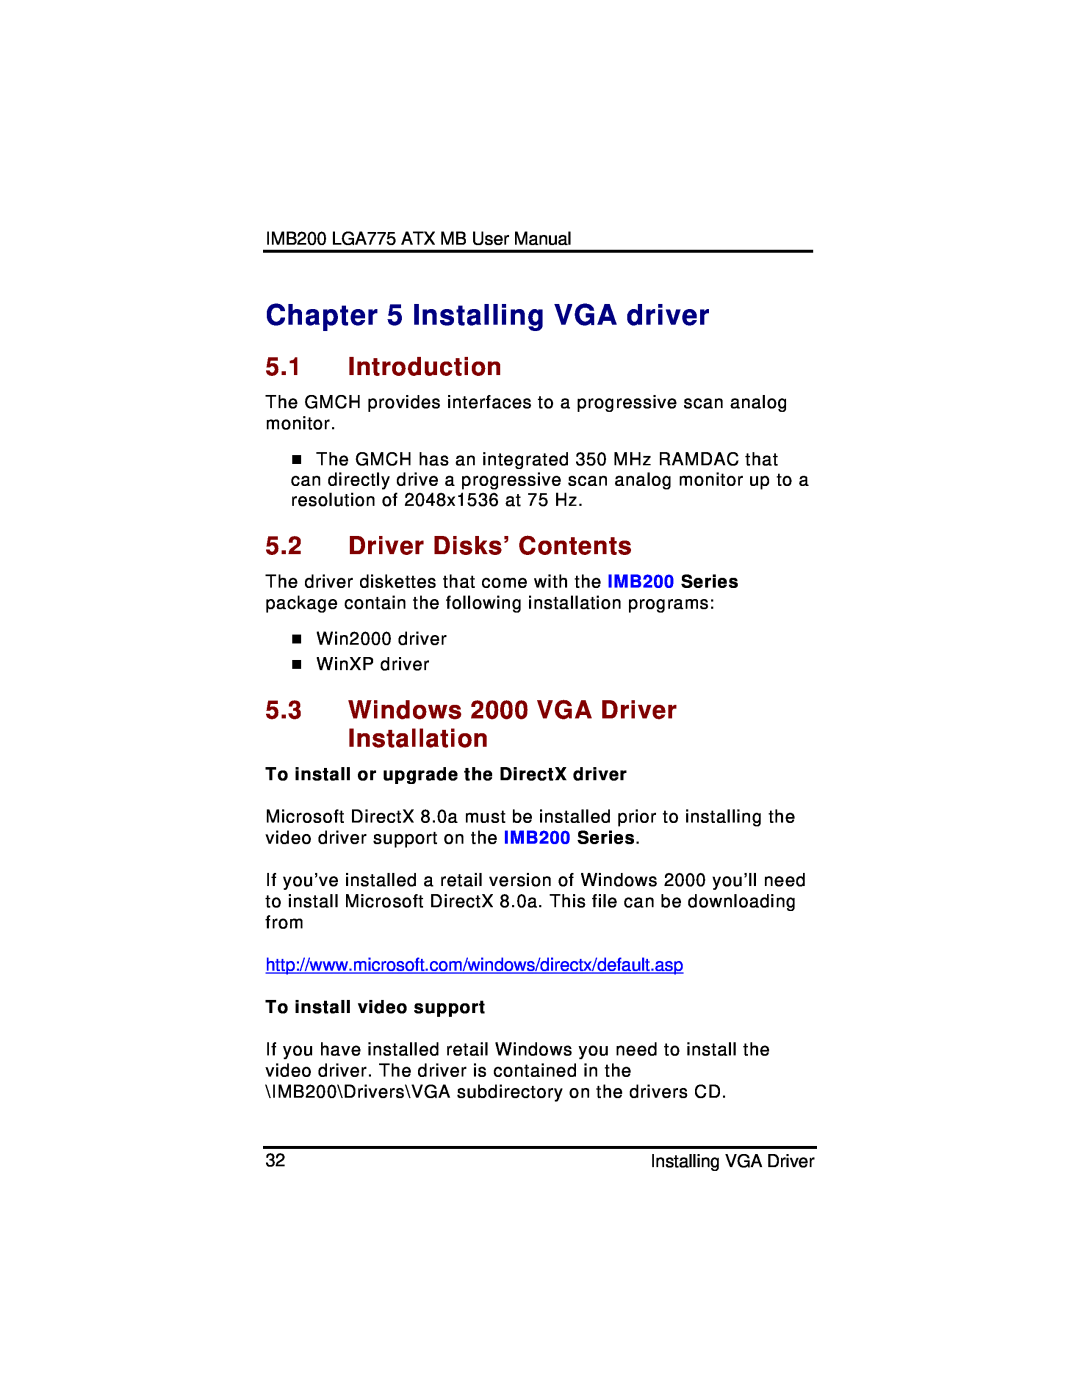 Intel IMB200VG Installing VGA driver, Introduction, Driver Disks’ Contents, Windows 2000 VGA Driver Installation 